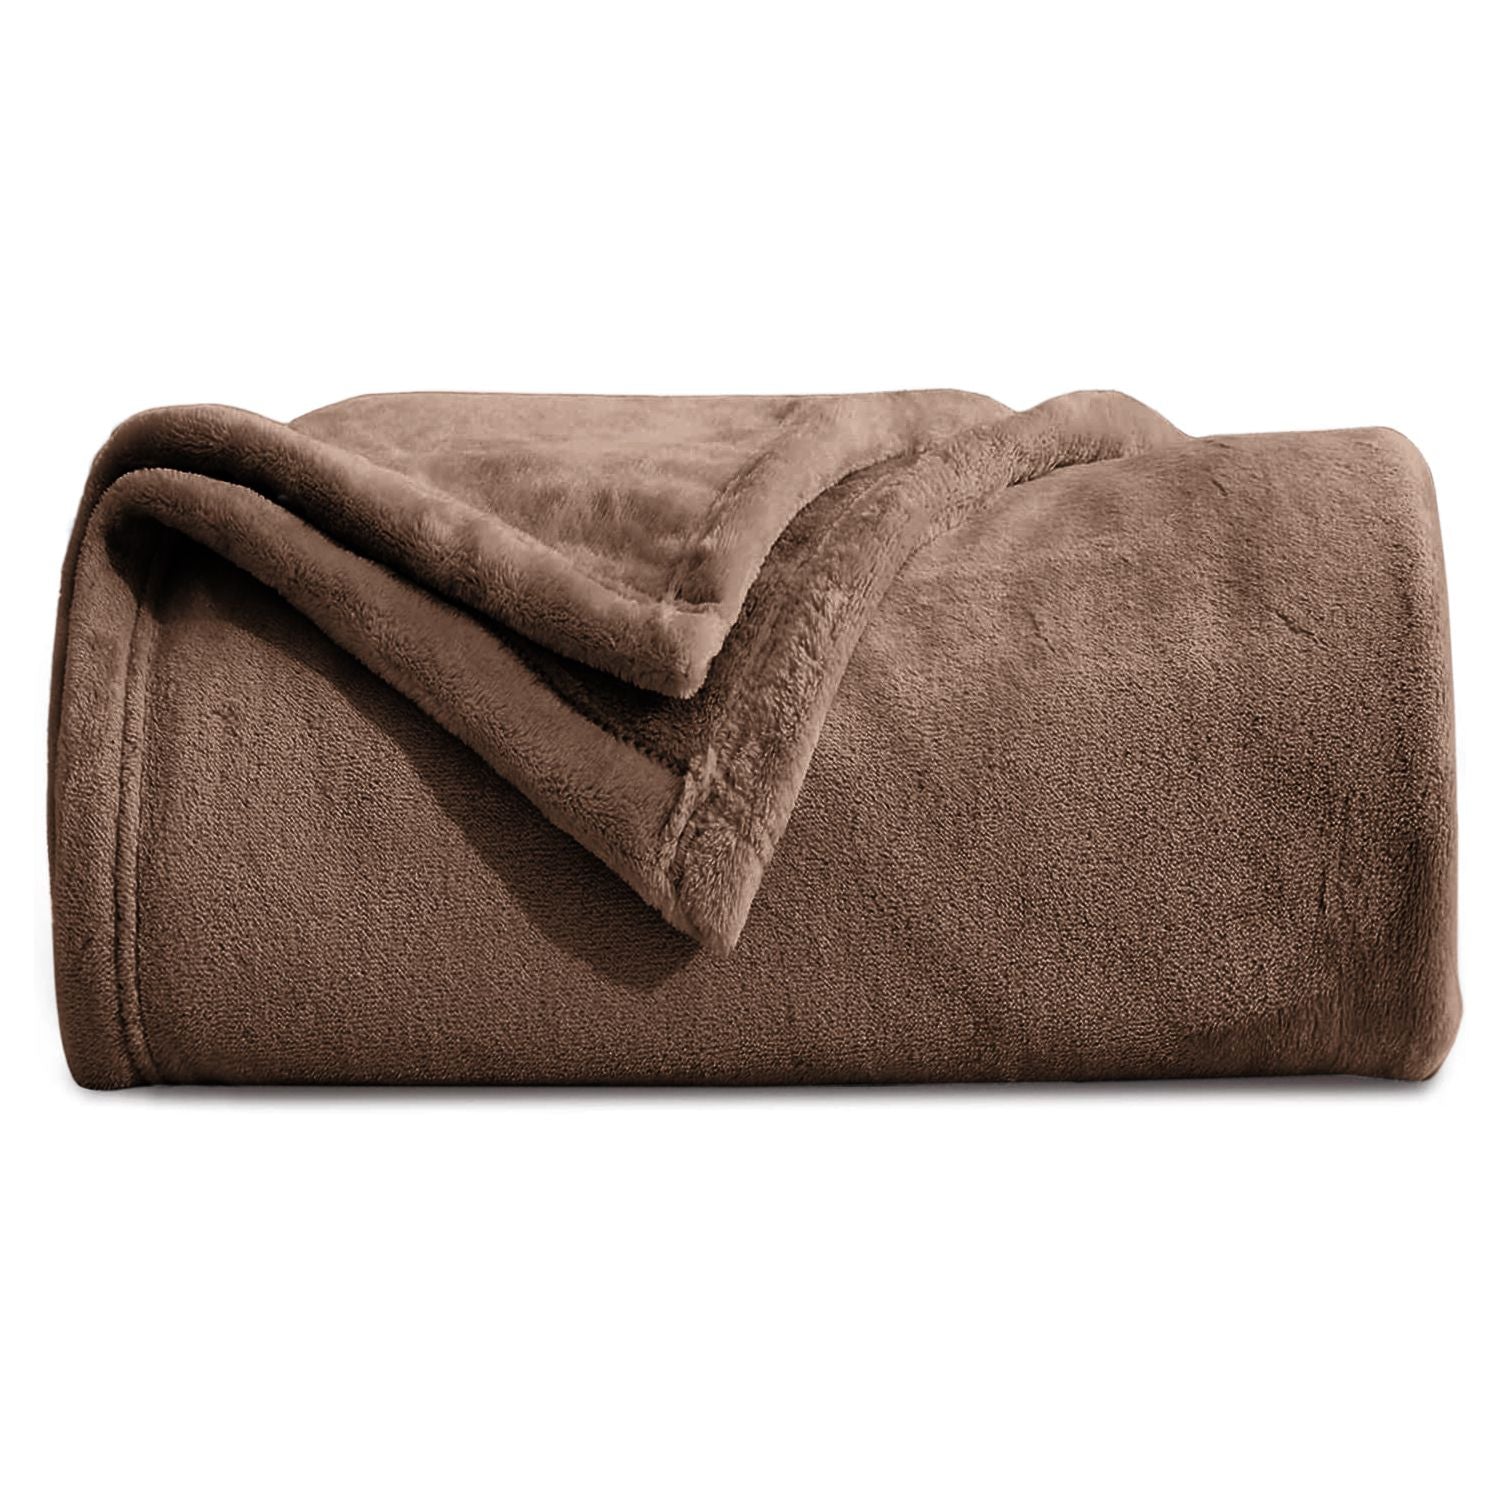 Fluffy Mink Fleece Throw Blanket - Coffee